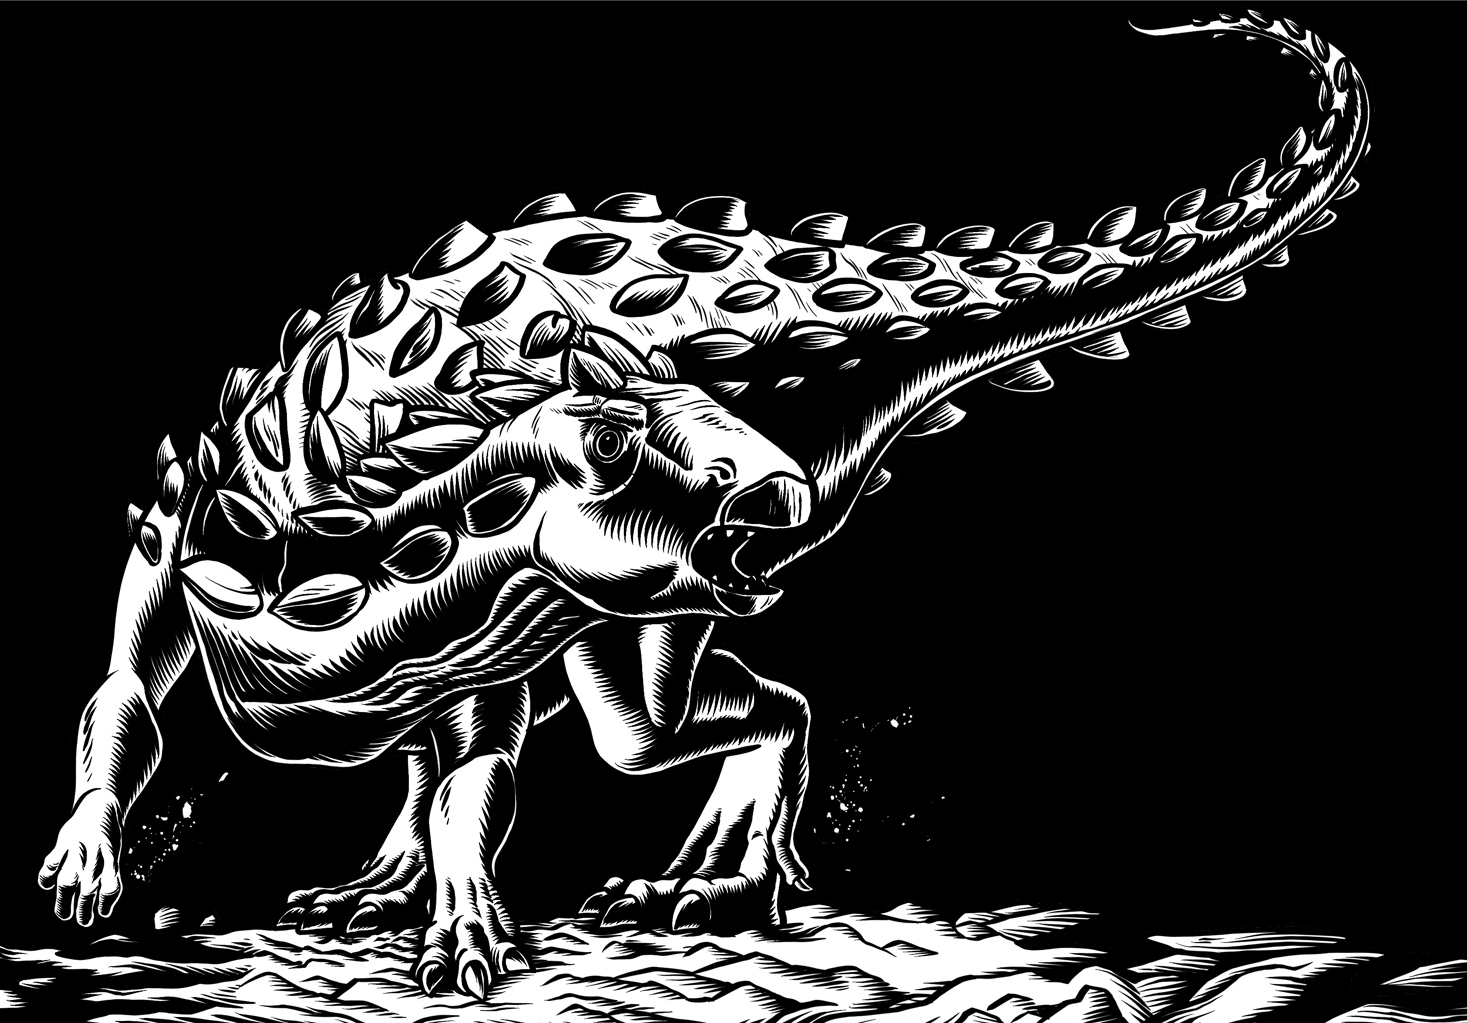 2D Black and White Ankilosaurus Dinosaur Illustration